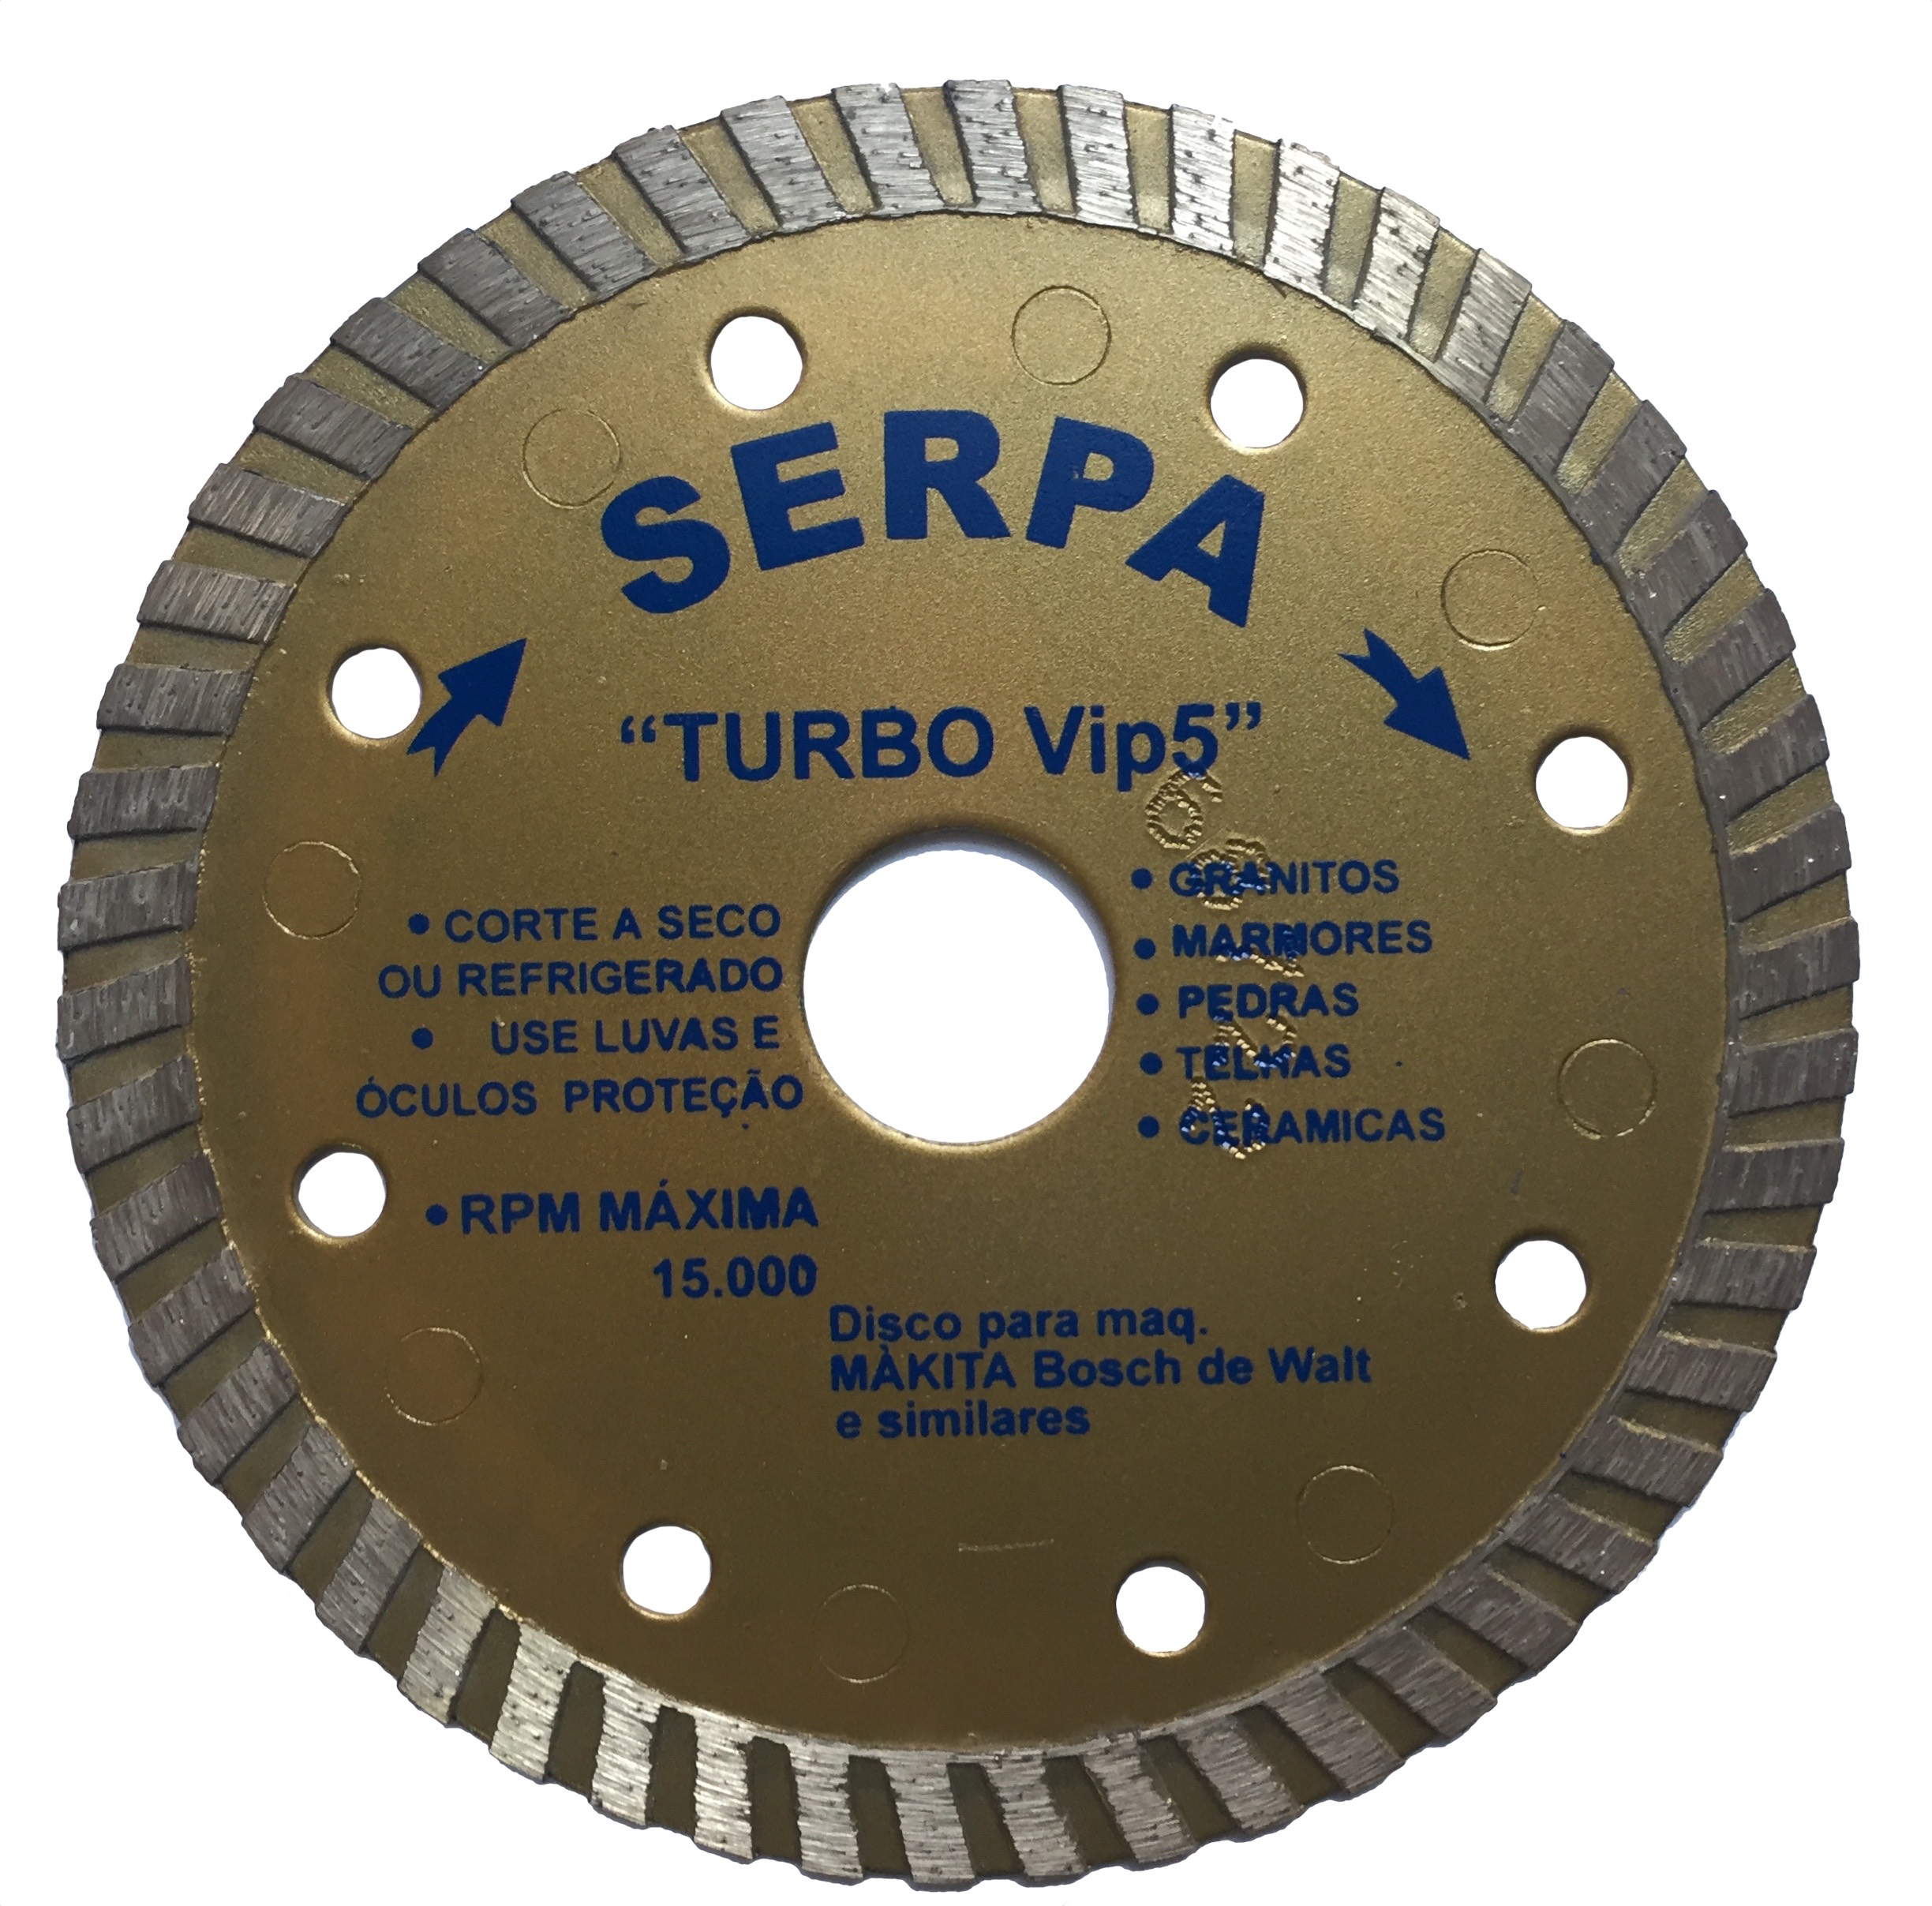 Turbo Vip 5